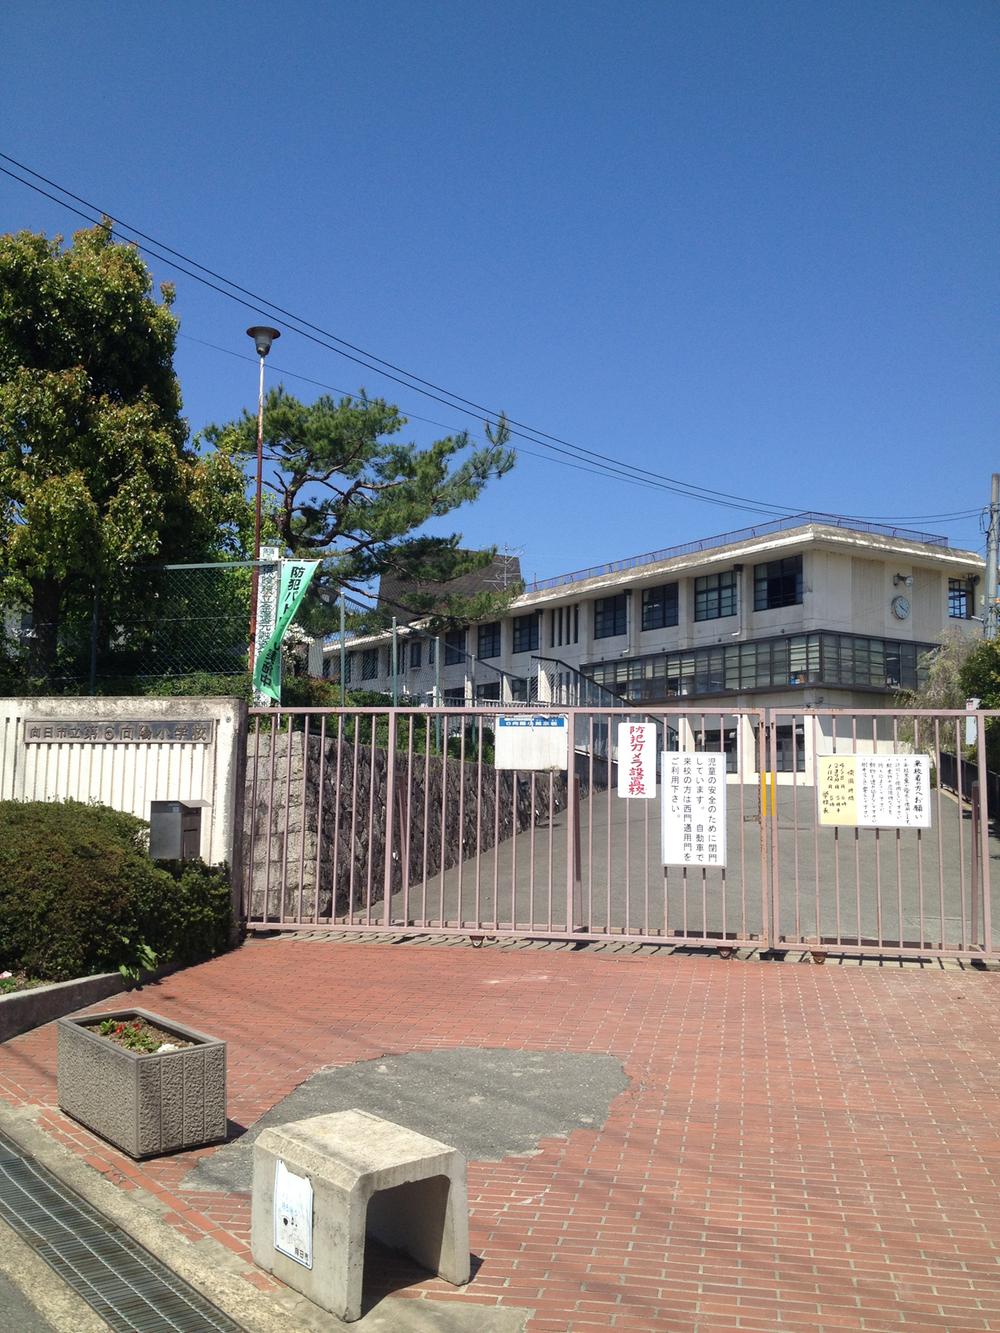 Primary school. Muko stand sixth Koyo to elementary school 909m